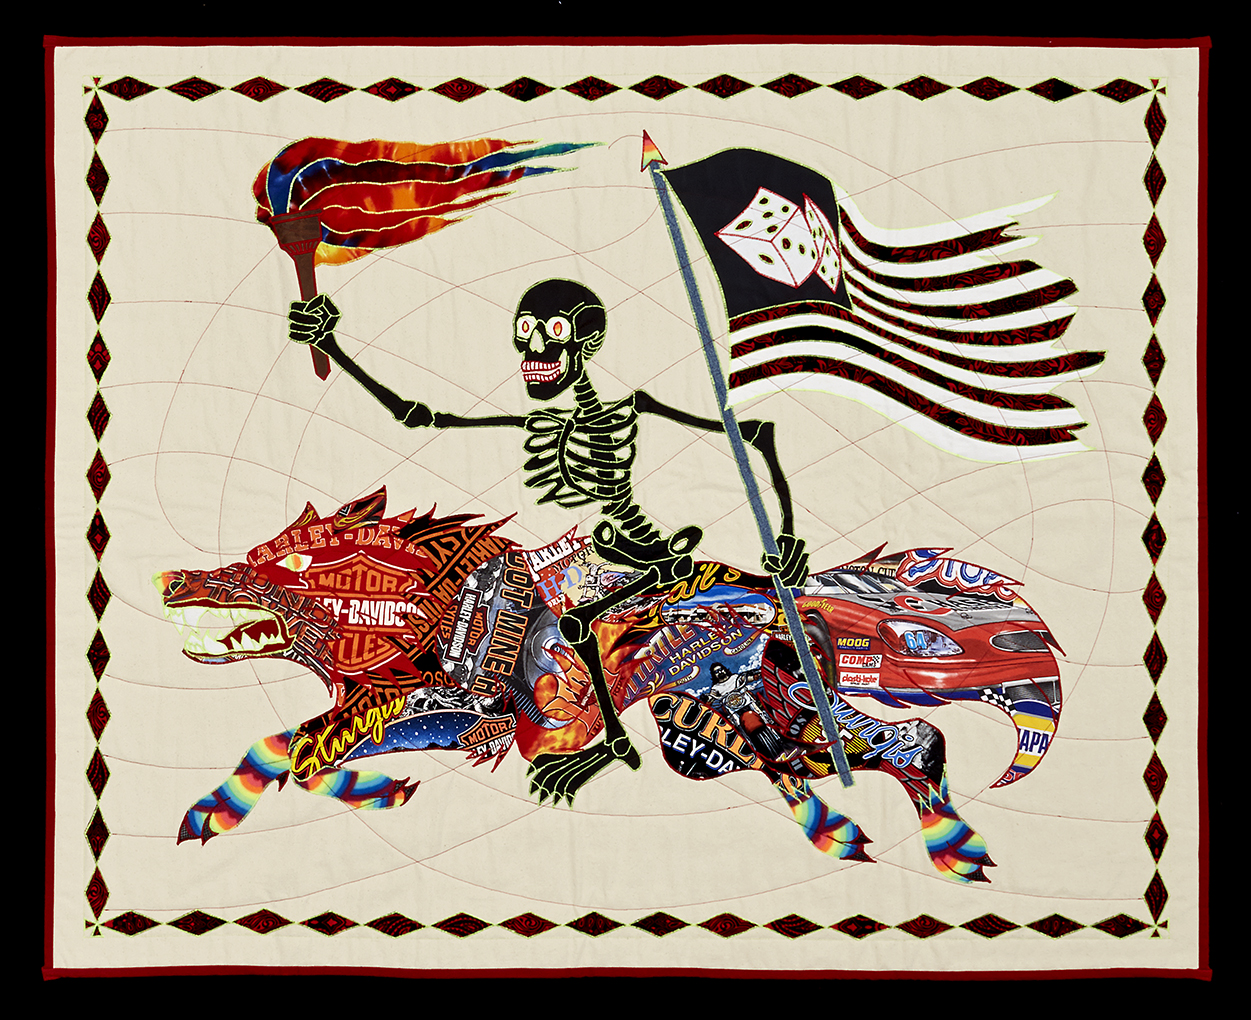 Ben Venom "I Am The Night Rider" quilt featuring a skeletal rider